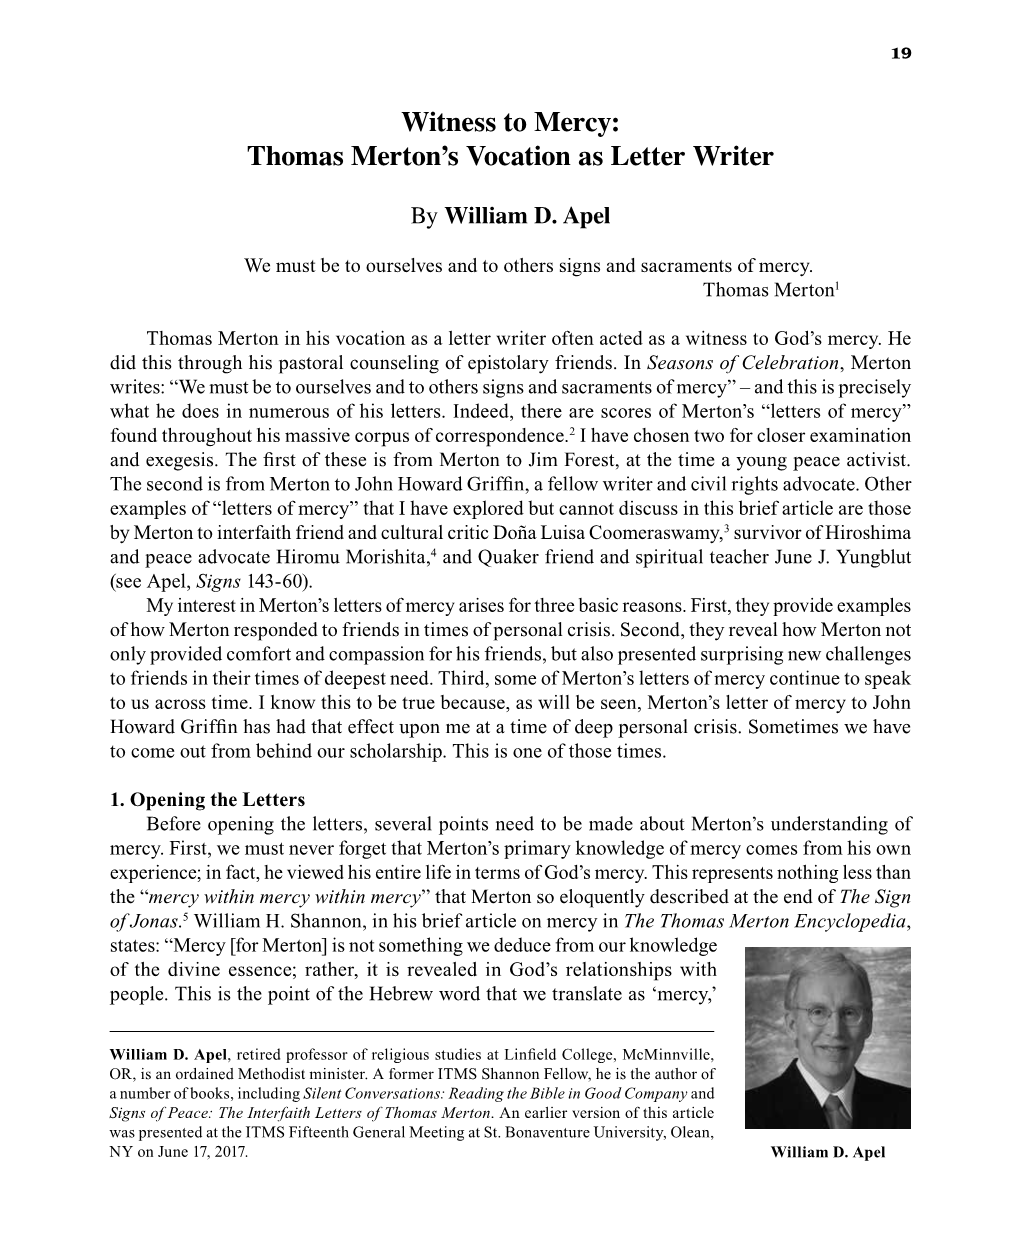 Thomas Merton's Vocation As Letter Writer